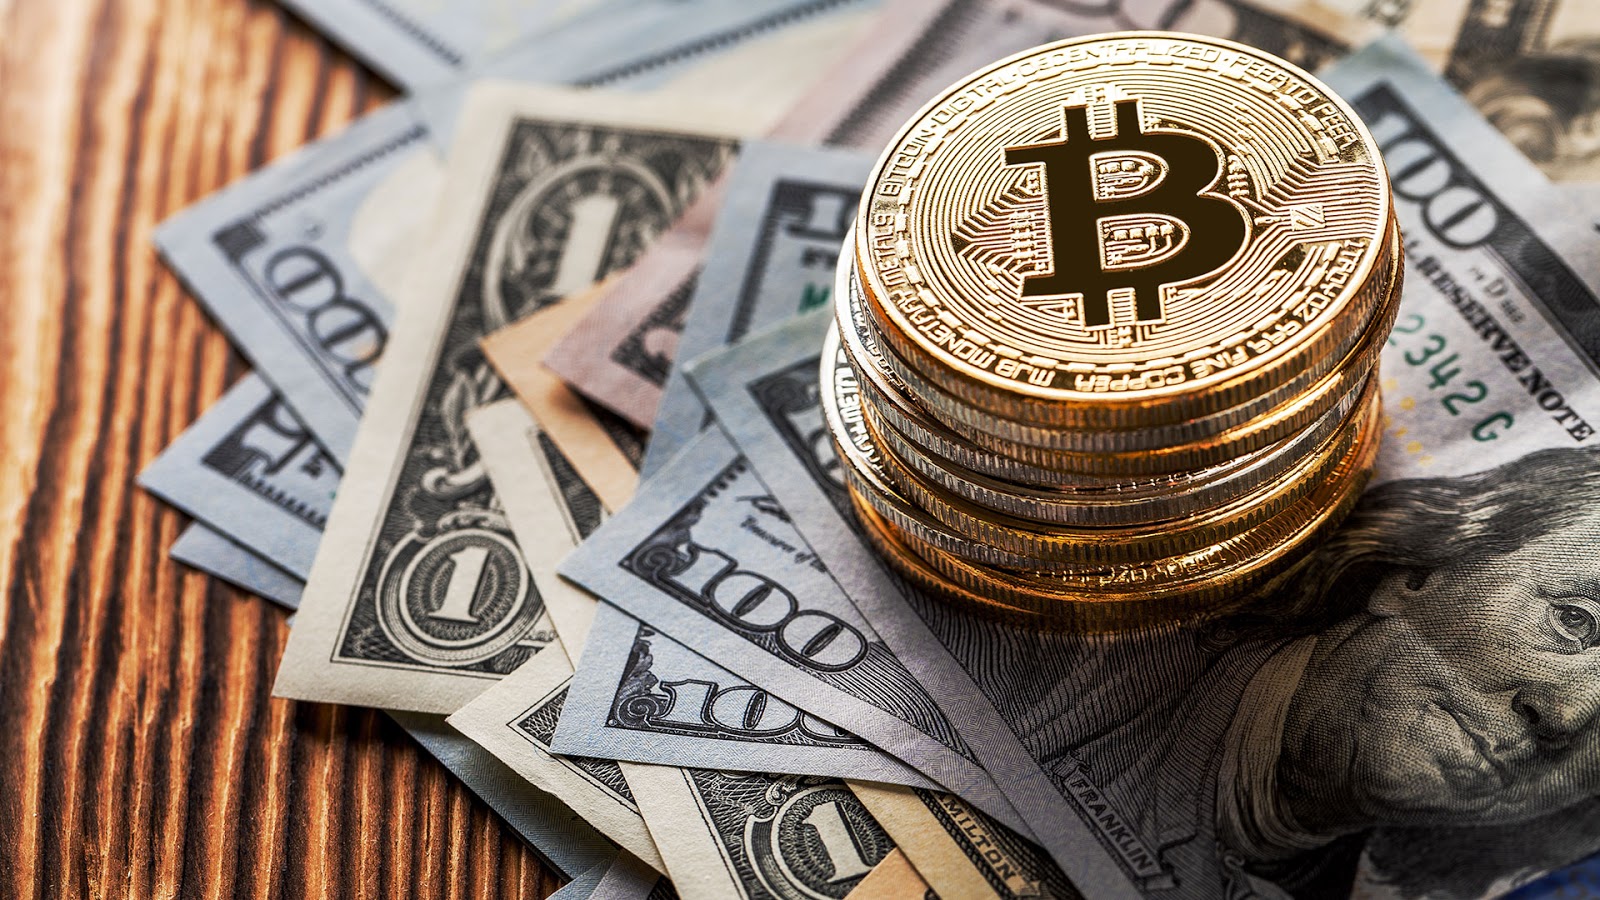 buy bitcoins in usd send to euros